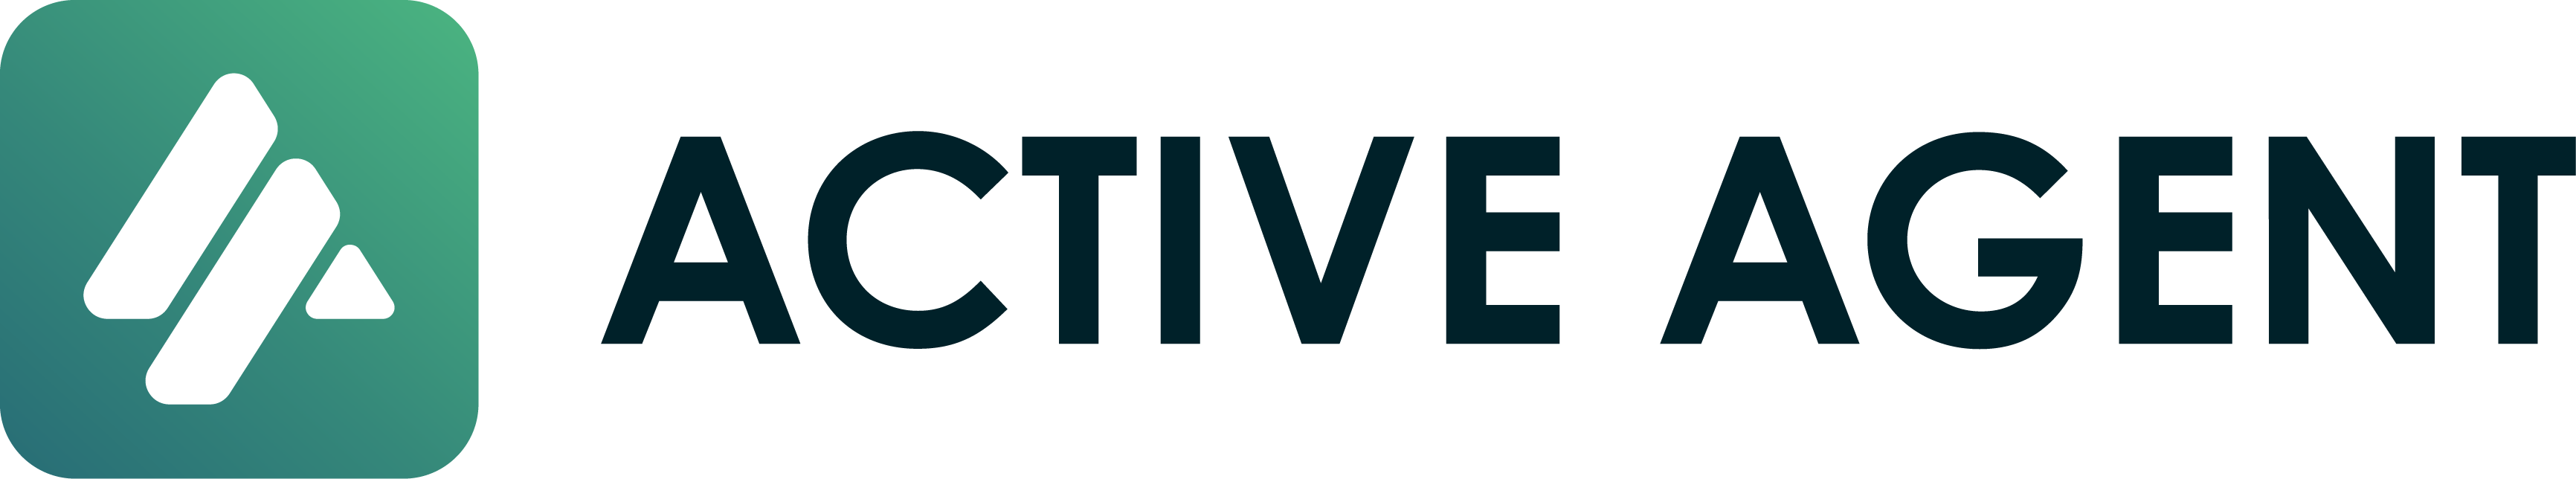 Active Agent logo